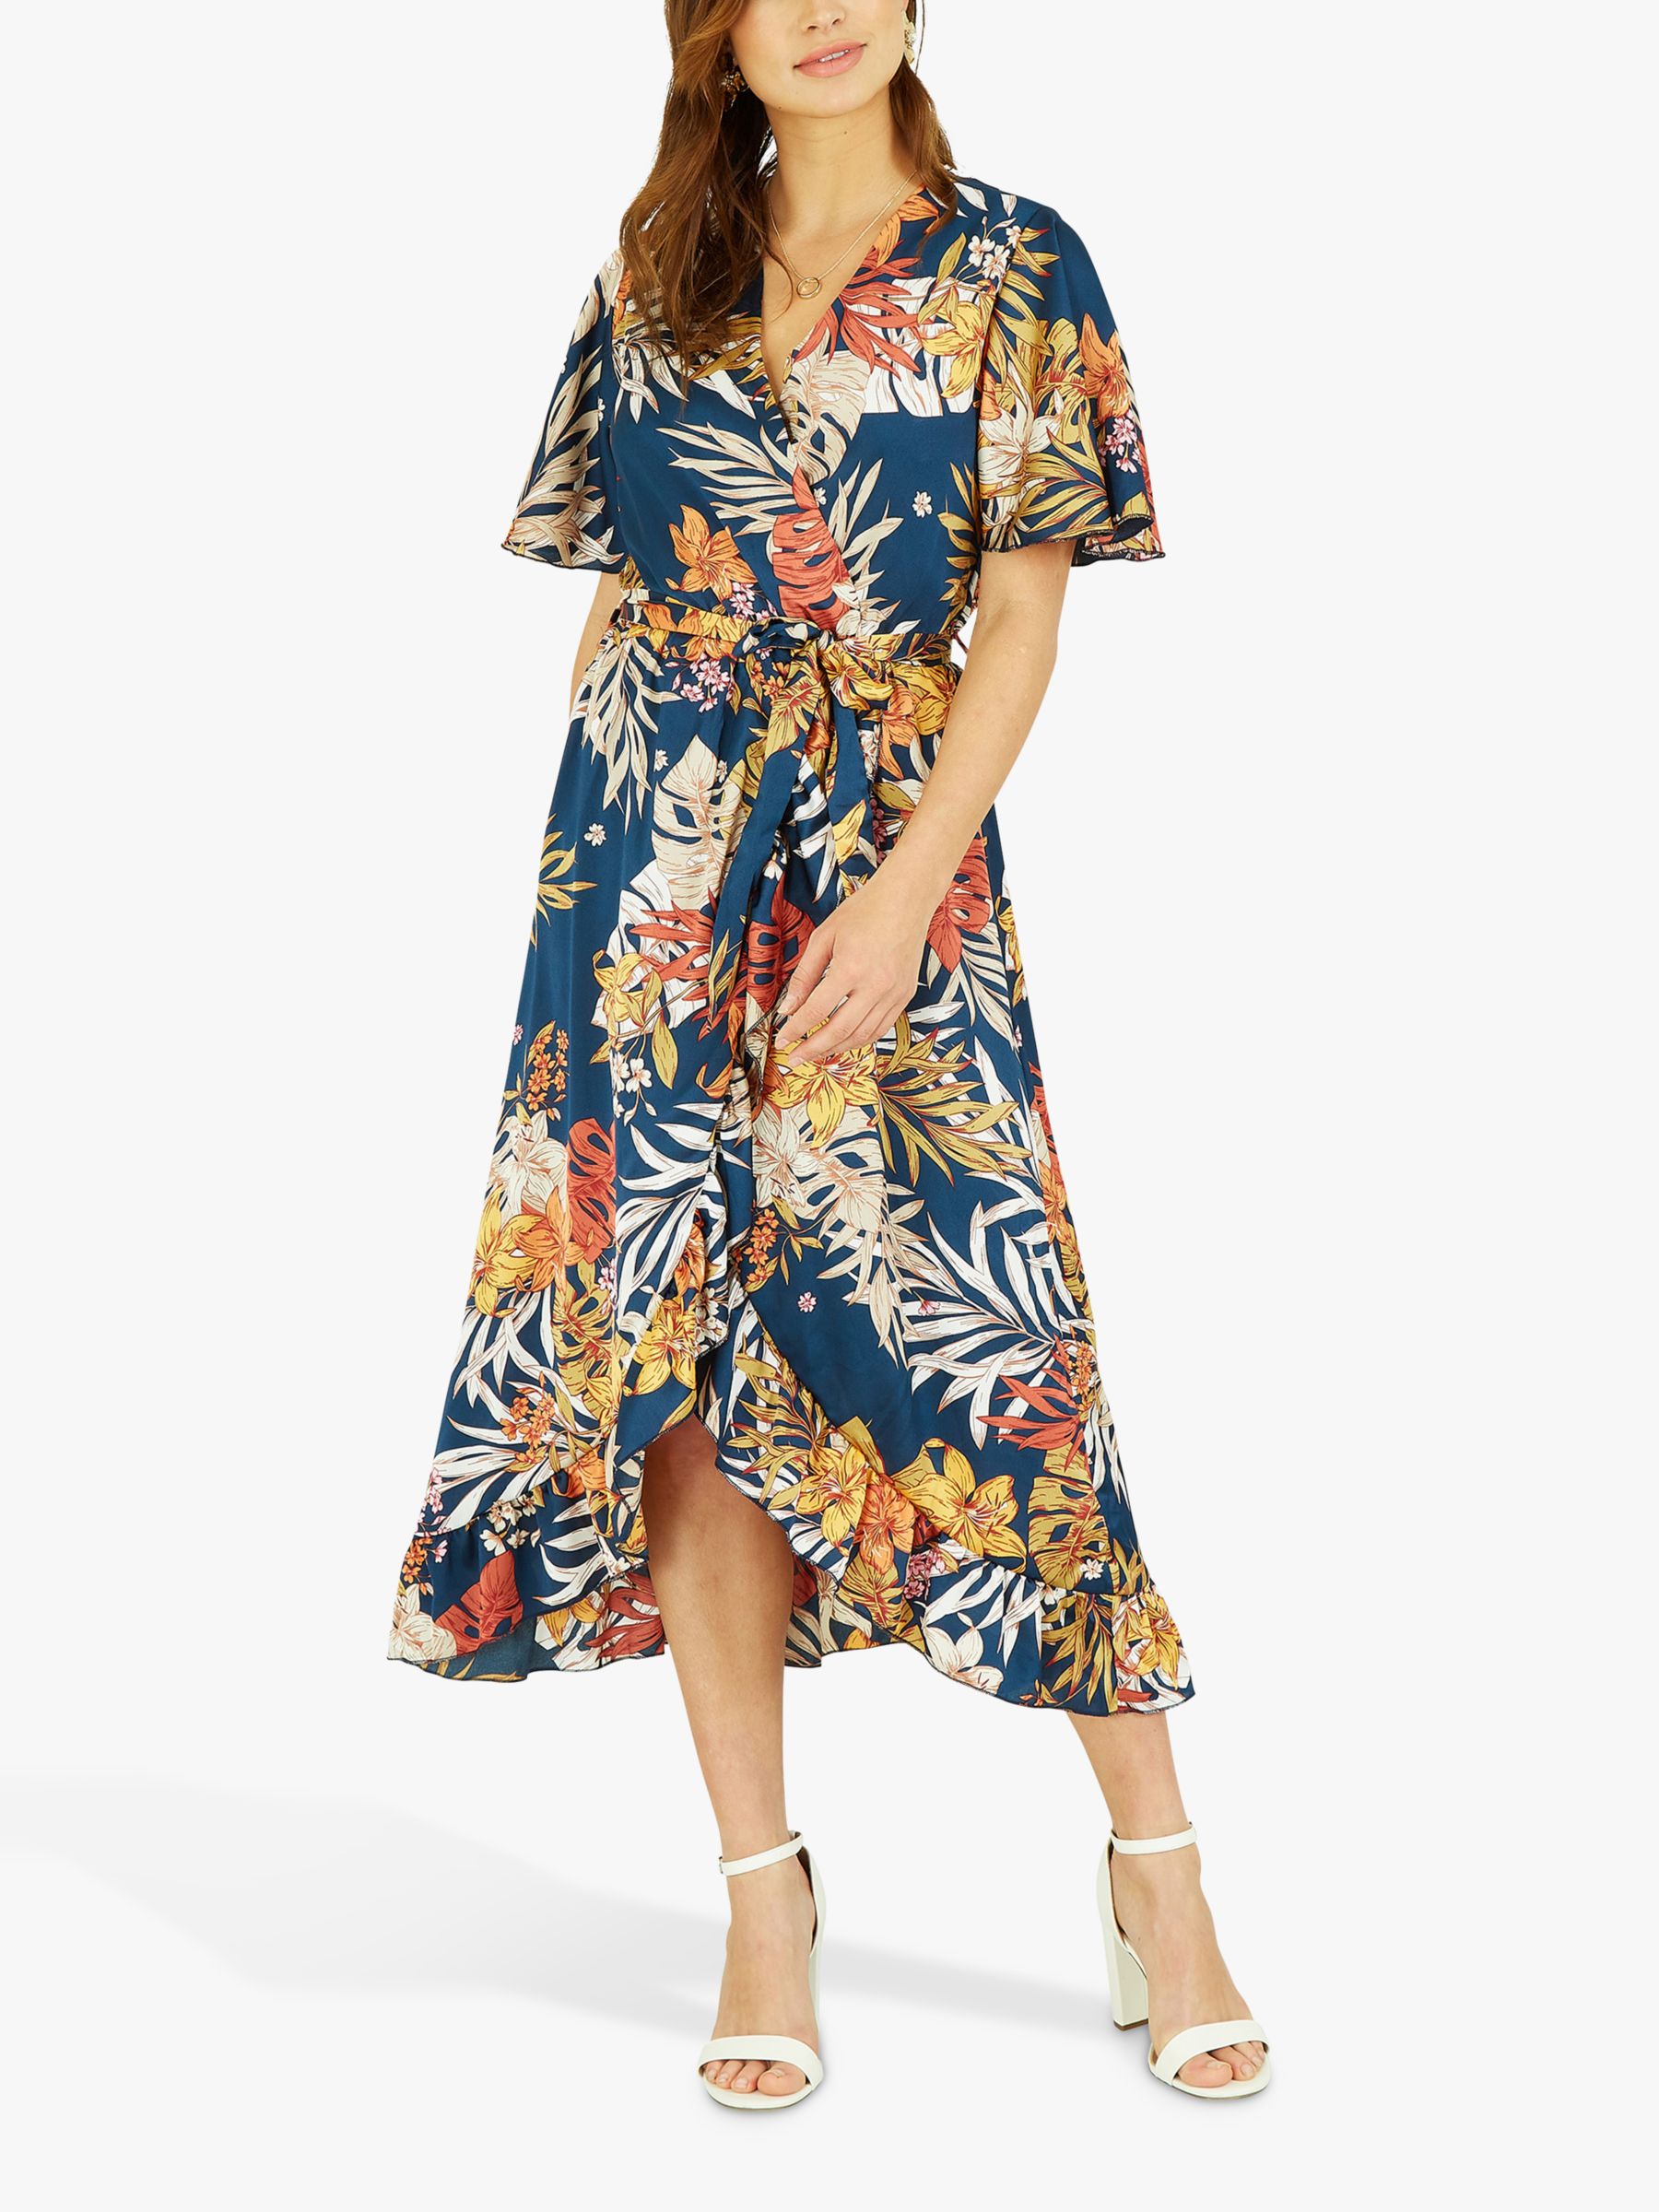 Mela London Leaf Print Satin Midi Wrap Dress, Navy/Multi